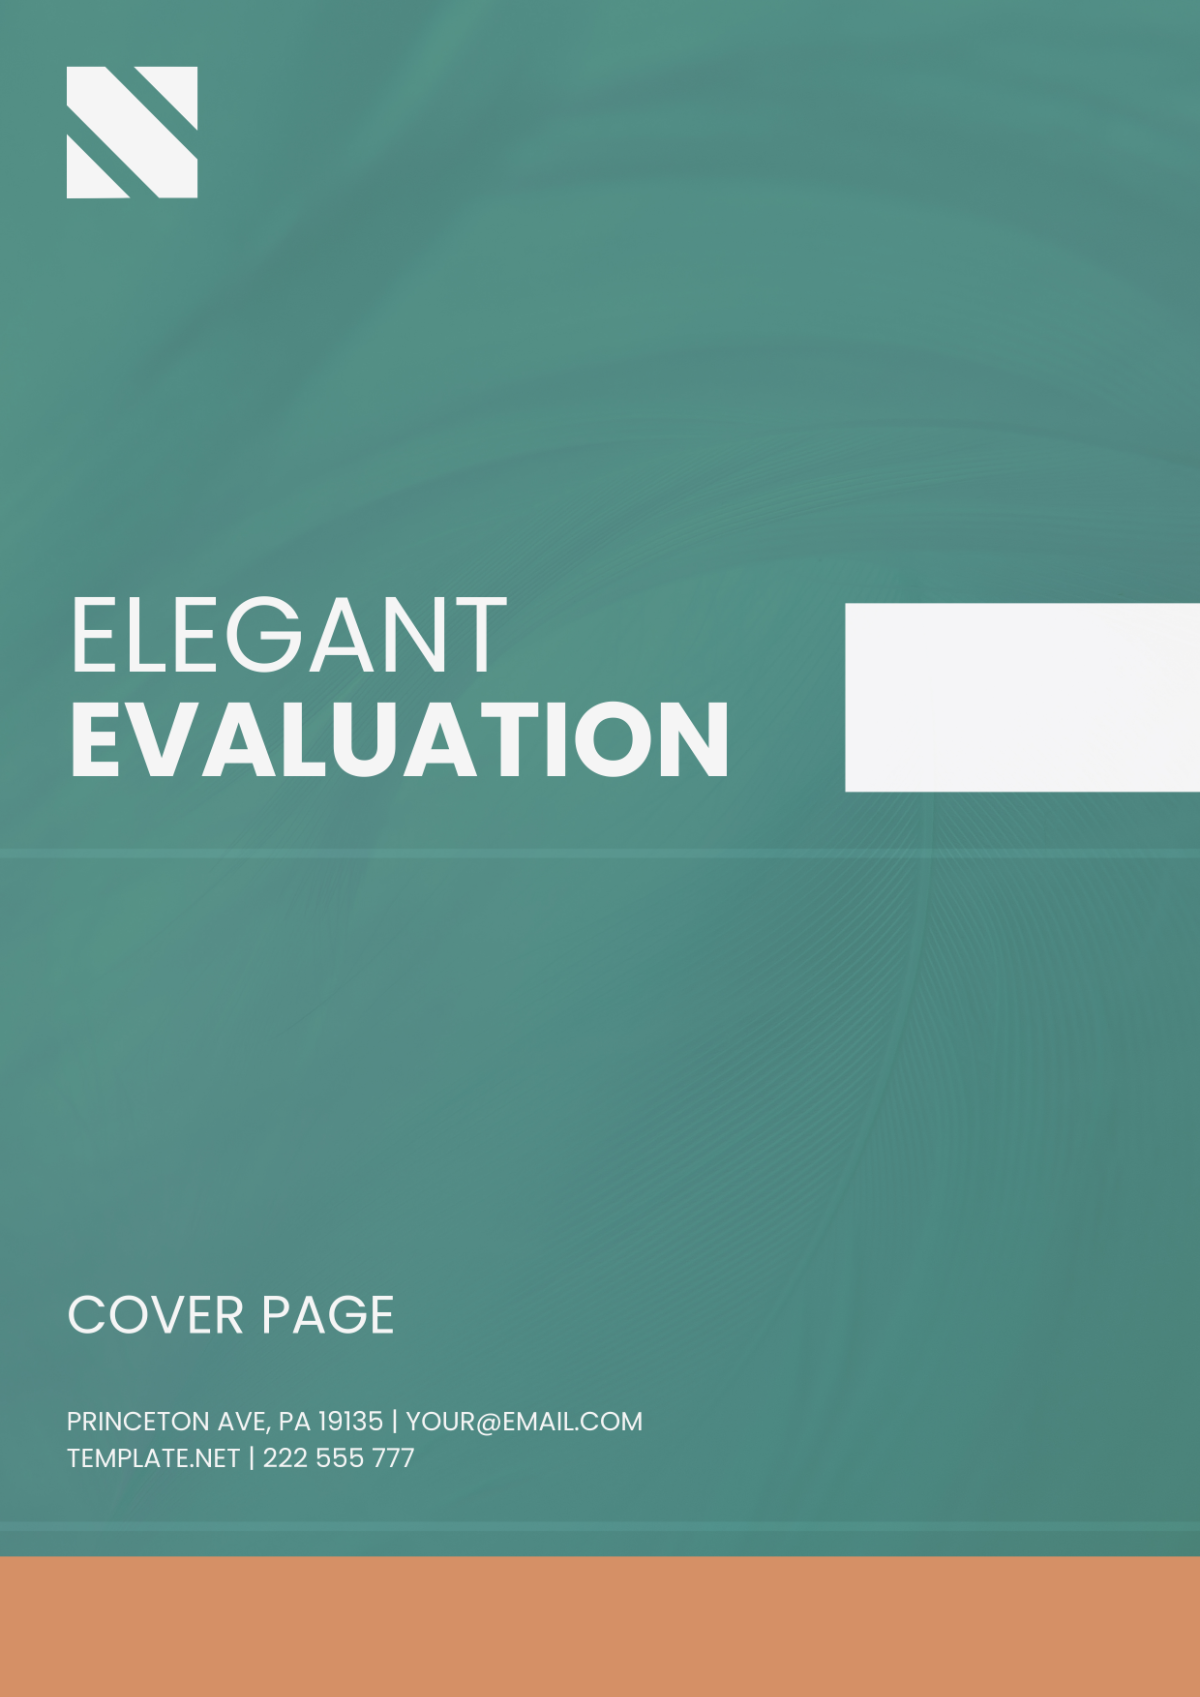 Elegant Evaluation Cover Page